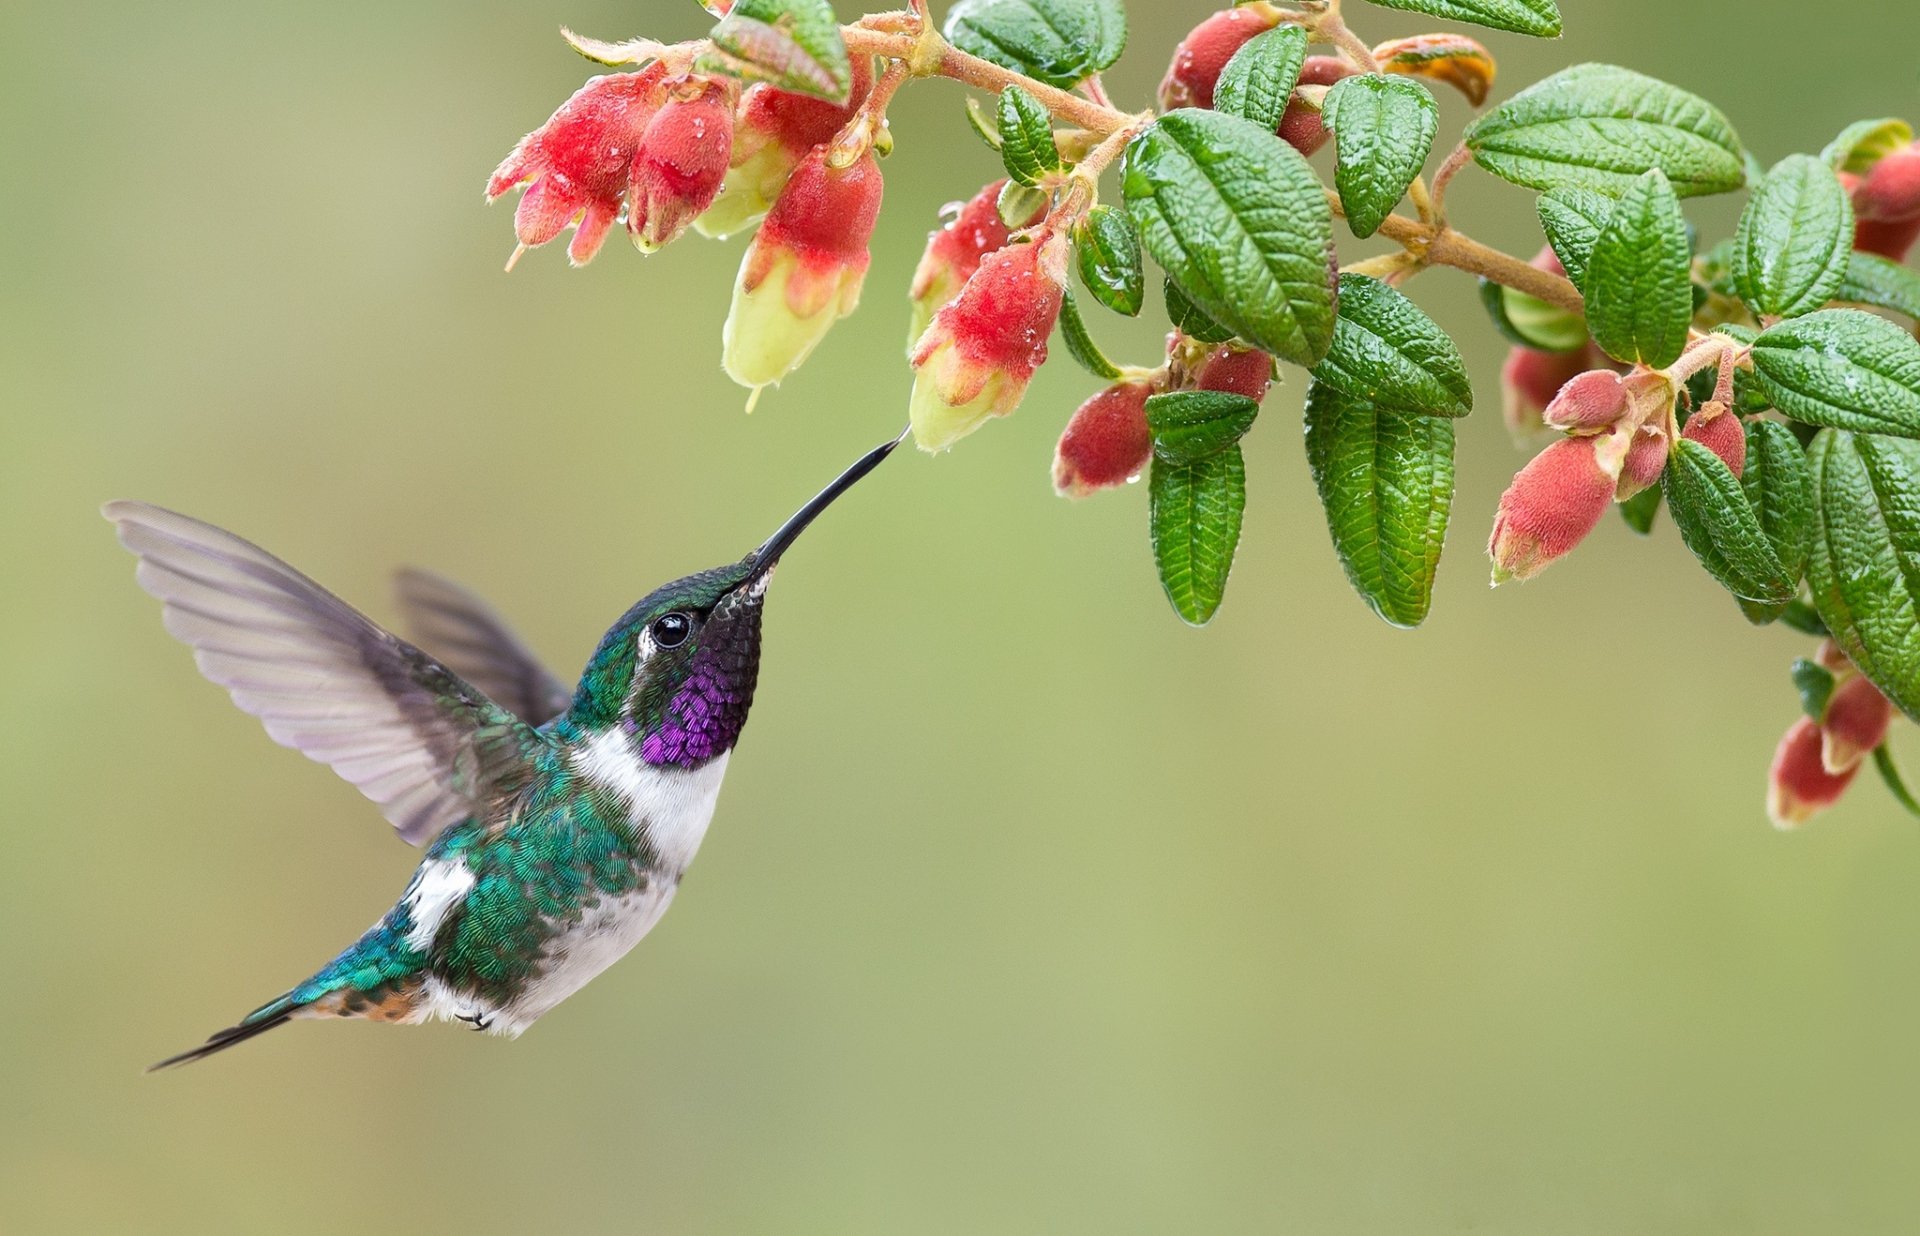 Hummingbird Hd Images